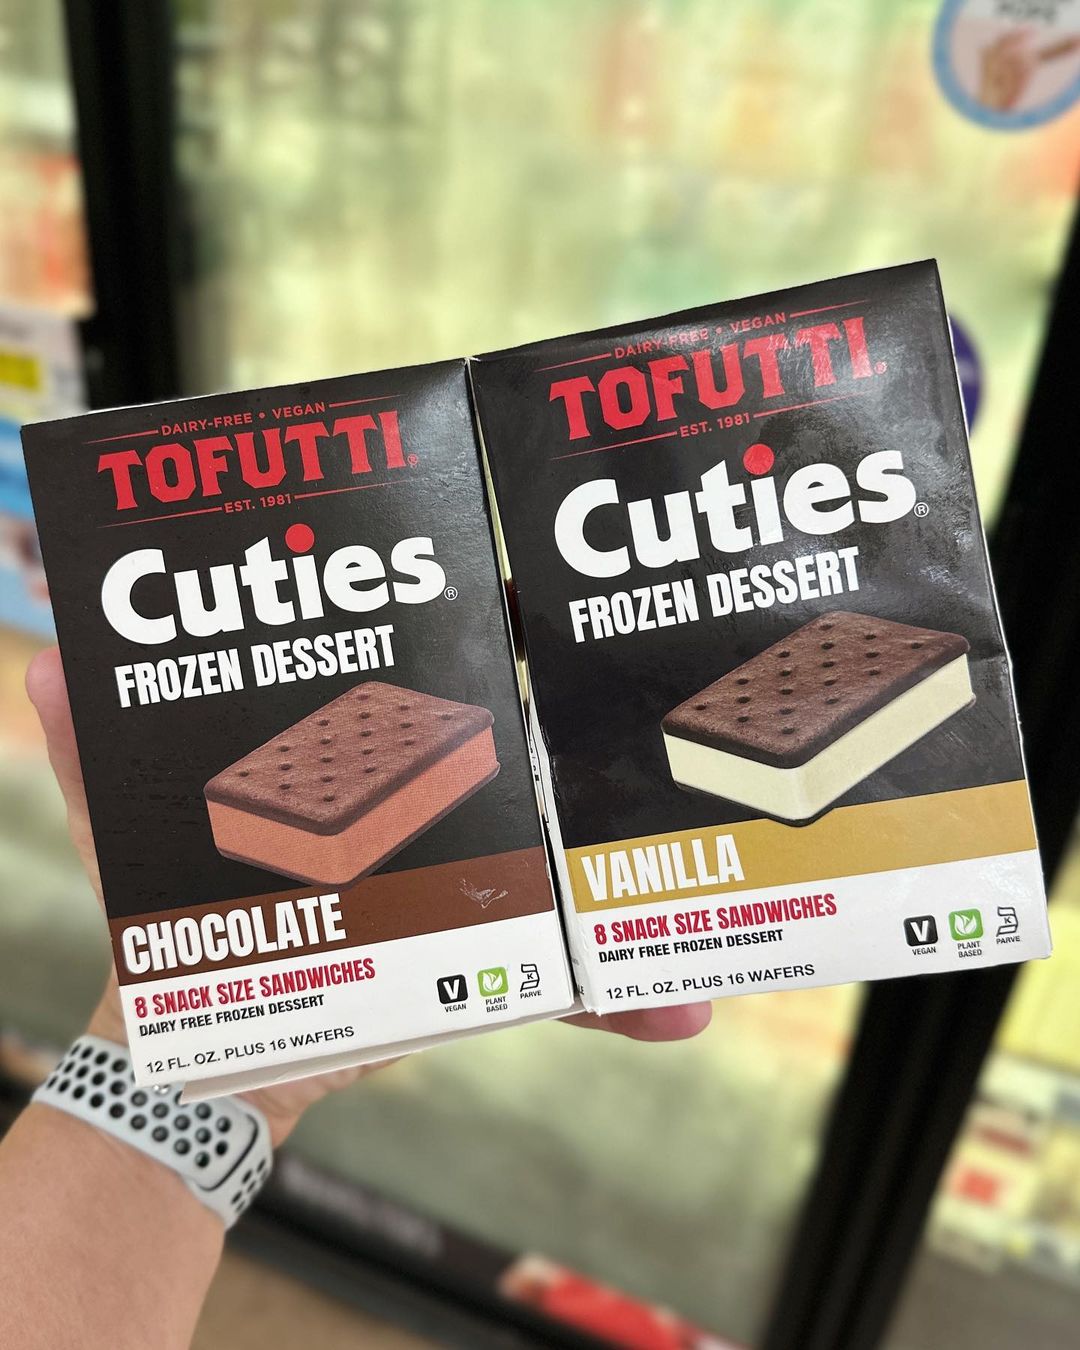 Person holding Tofutti Cuties Frozen Desserts